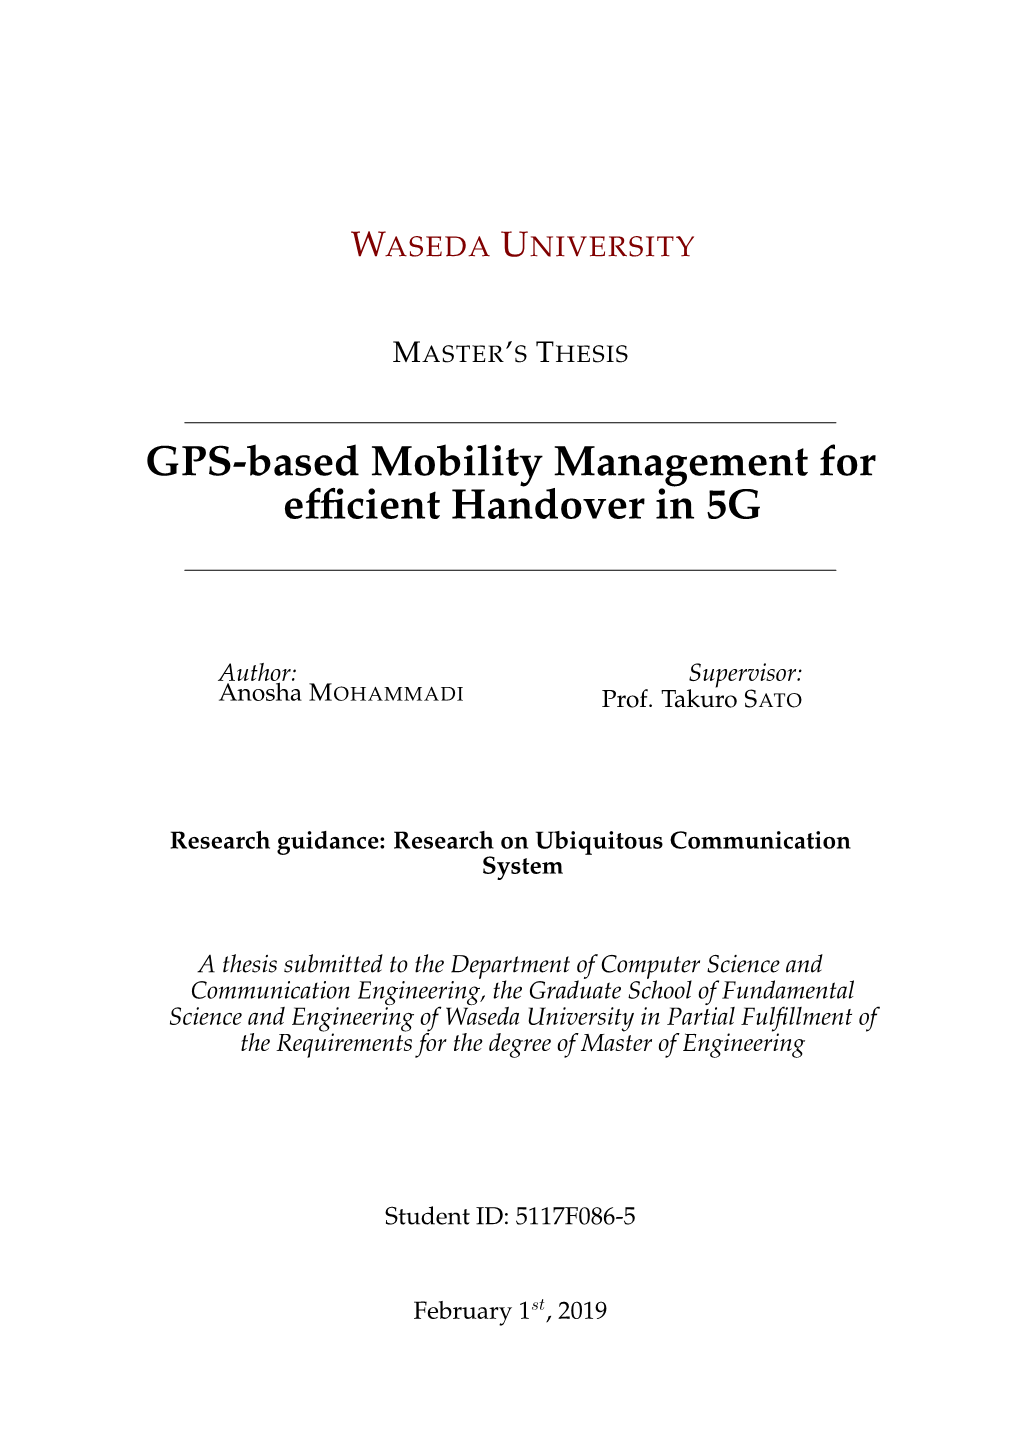 GPS-Based Mobility Management for Efficient Handover in 5G